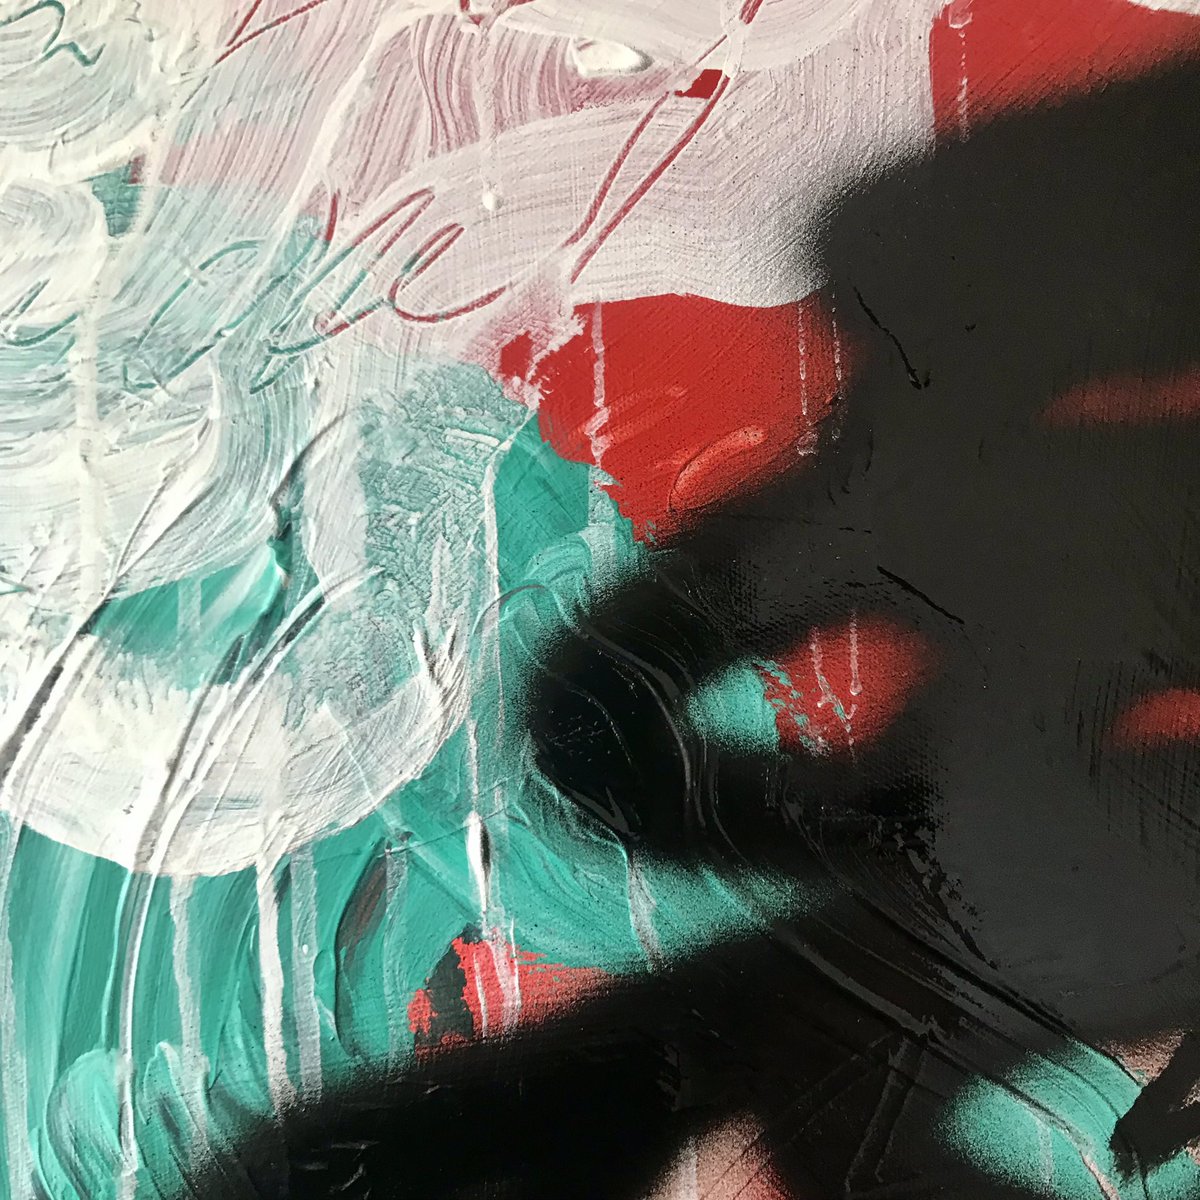 Thermobaric Reminder #wip 

#painting #abstract #mixedmedia #curator #gallerysrt #colours #collectors #galleries #london #paris #newyork #denmark #belgium #conceptualart #contemporaryart #artmagazines #art #artist #arte #artgallery #artwork